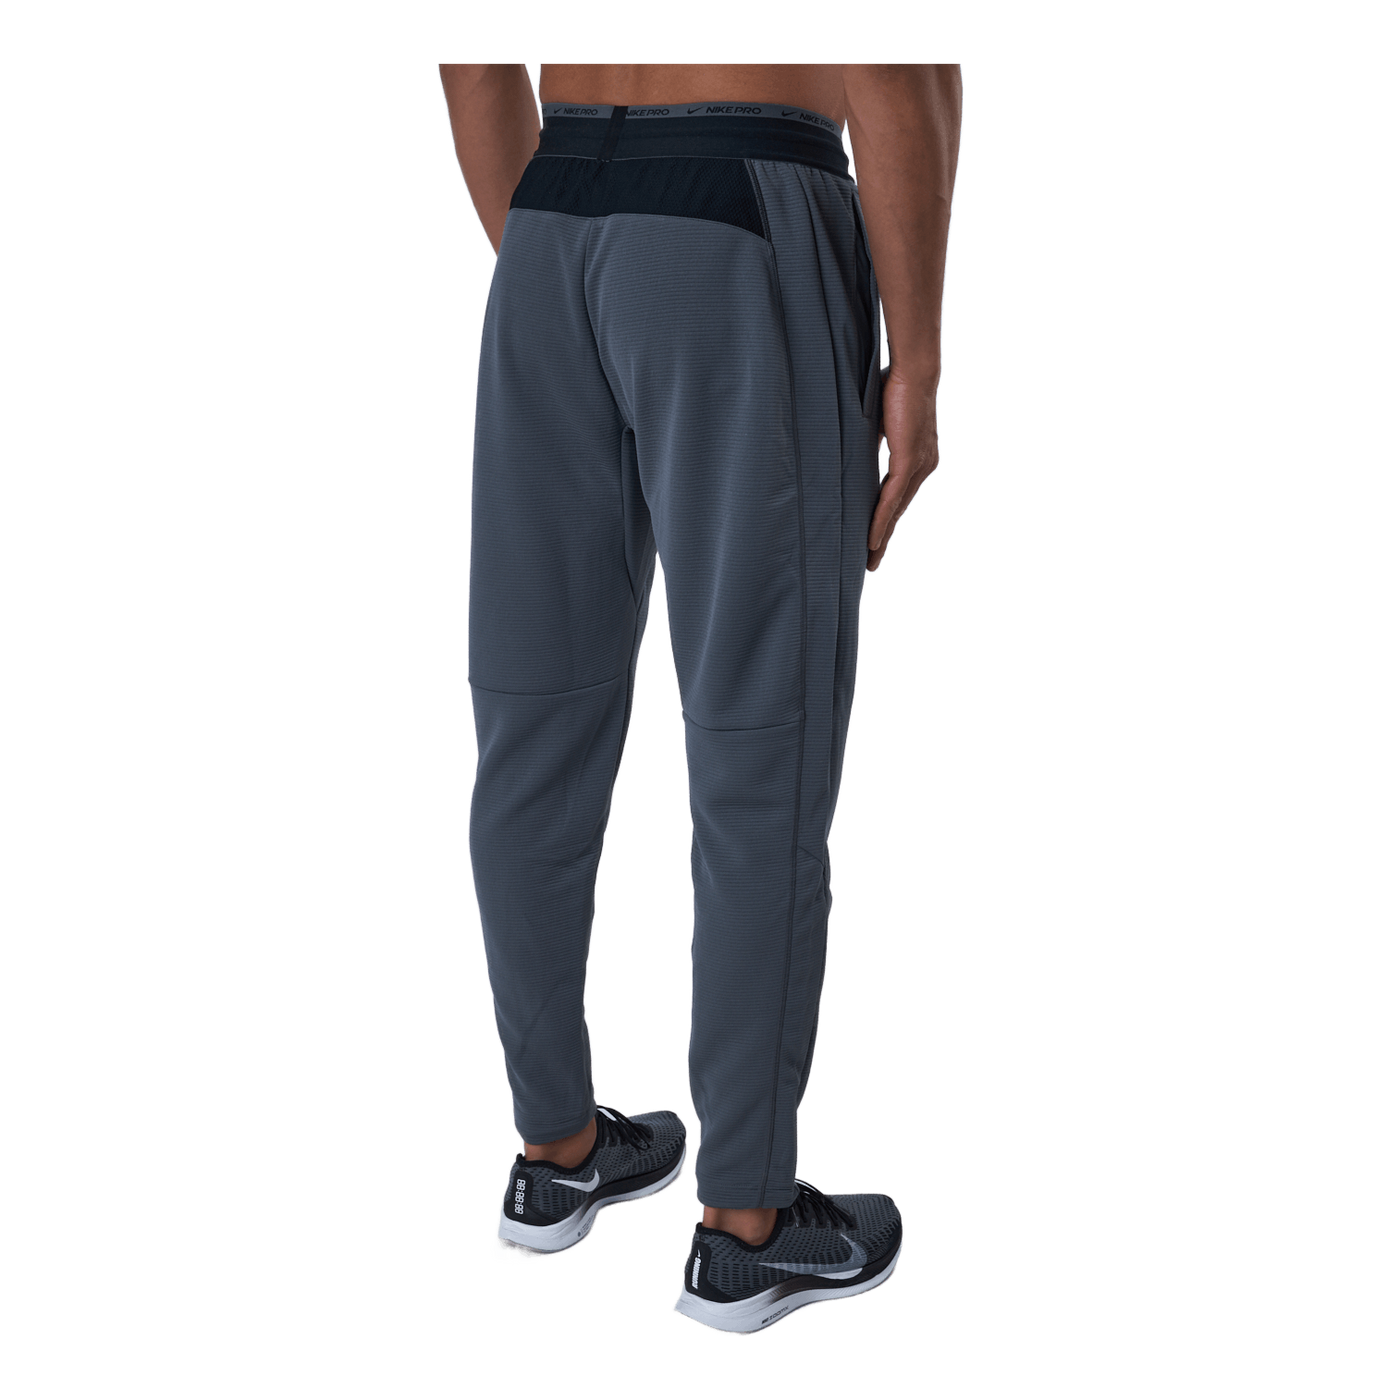 Nike Pro Men's Fleece Training Iron Grey/black/black